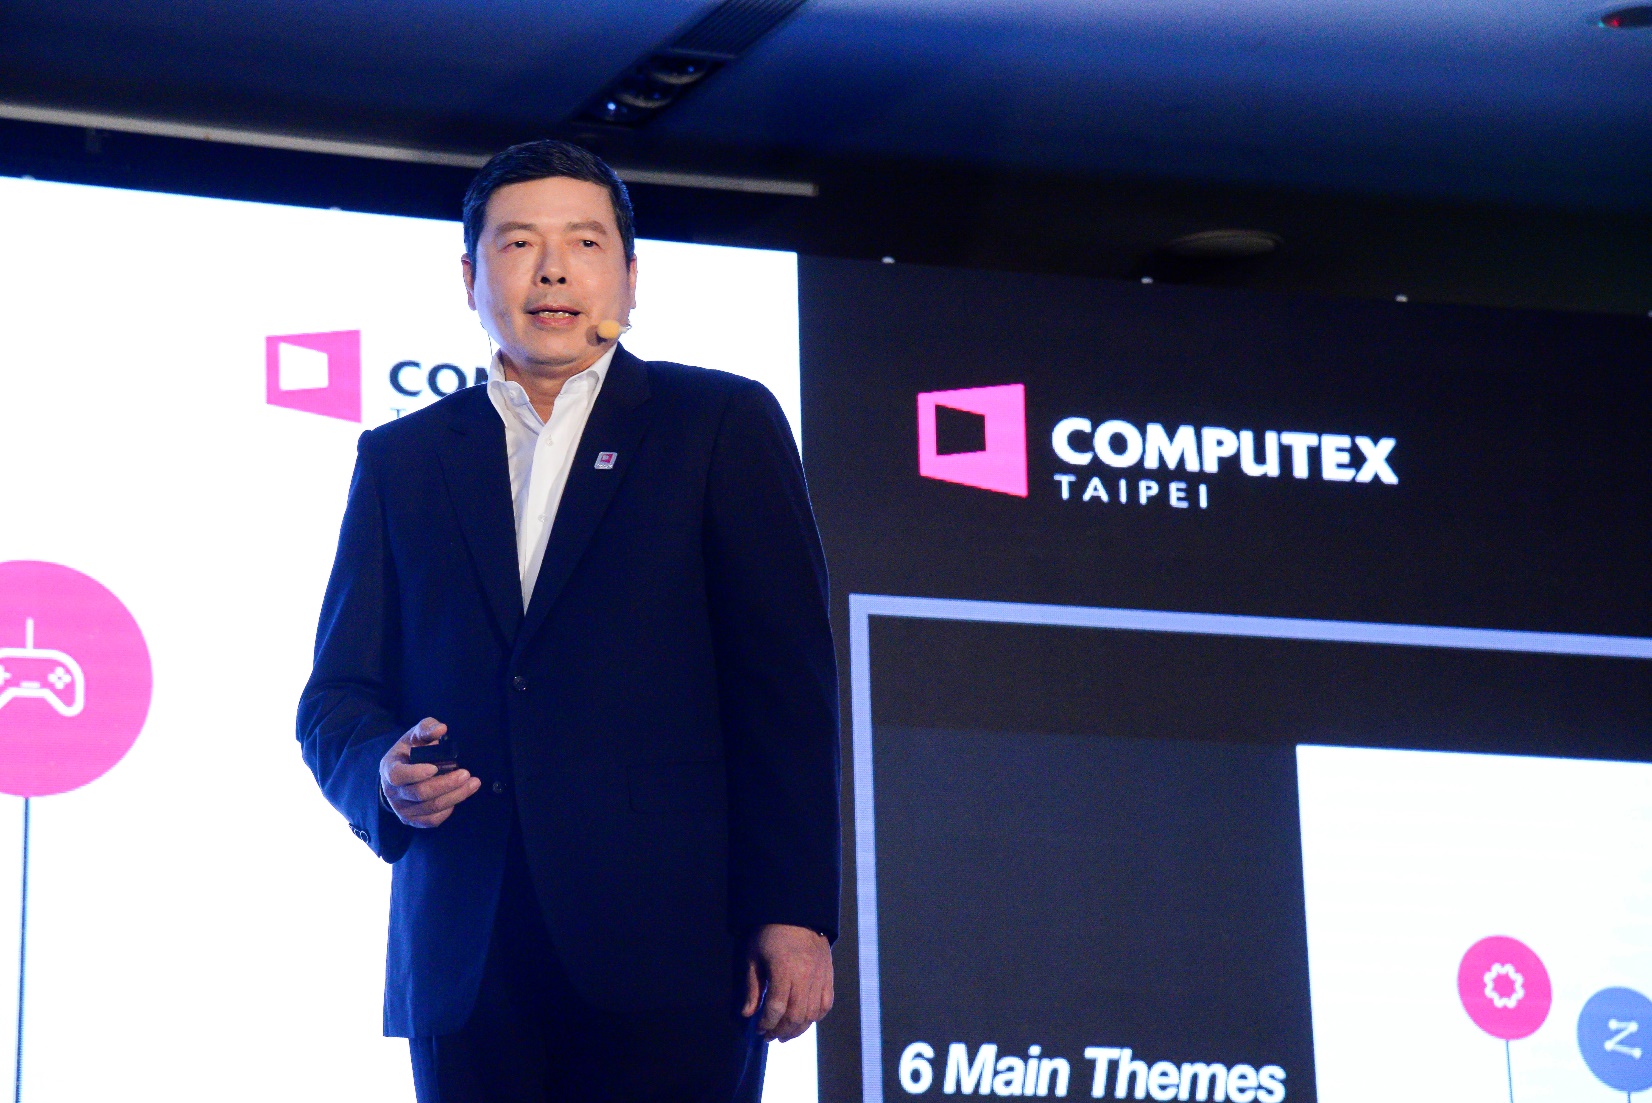 mr  walter yeh president ceo taitra ผู้บริหาร AMD ดร.ลิซ่า ซู CEO Dr. Lisa Su เตรียมเปิดเผยข้อมูลสำคัญในหัวข้อ “The Next Generation of High Performance Computing” ในงาน Computex 2019 ที่จะถึงนี้ 